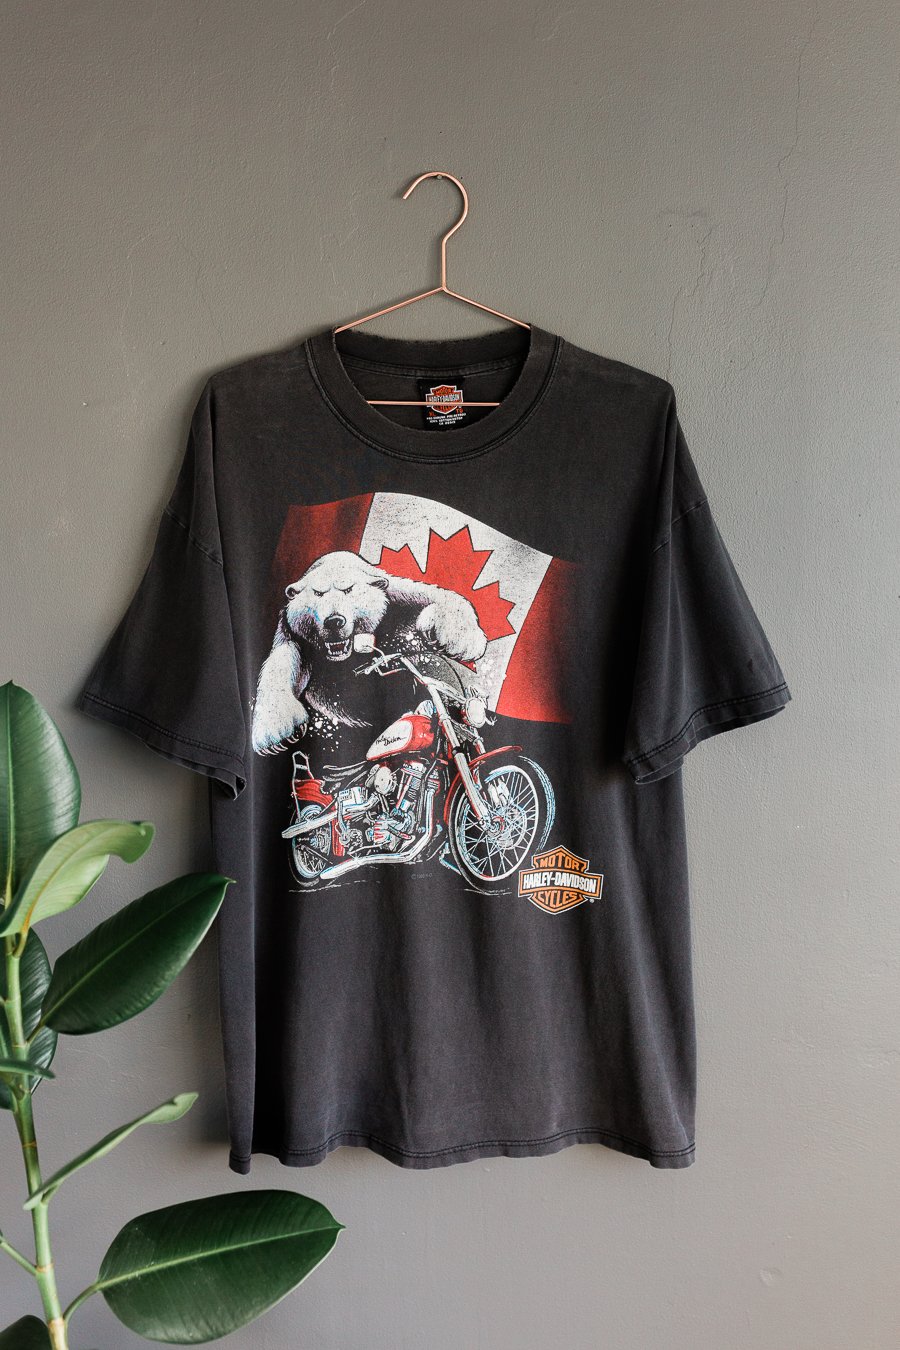 Image of 2000 Harley Davidson -  Saint-John N.B. Canada 